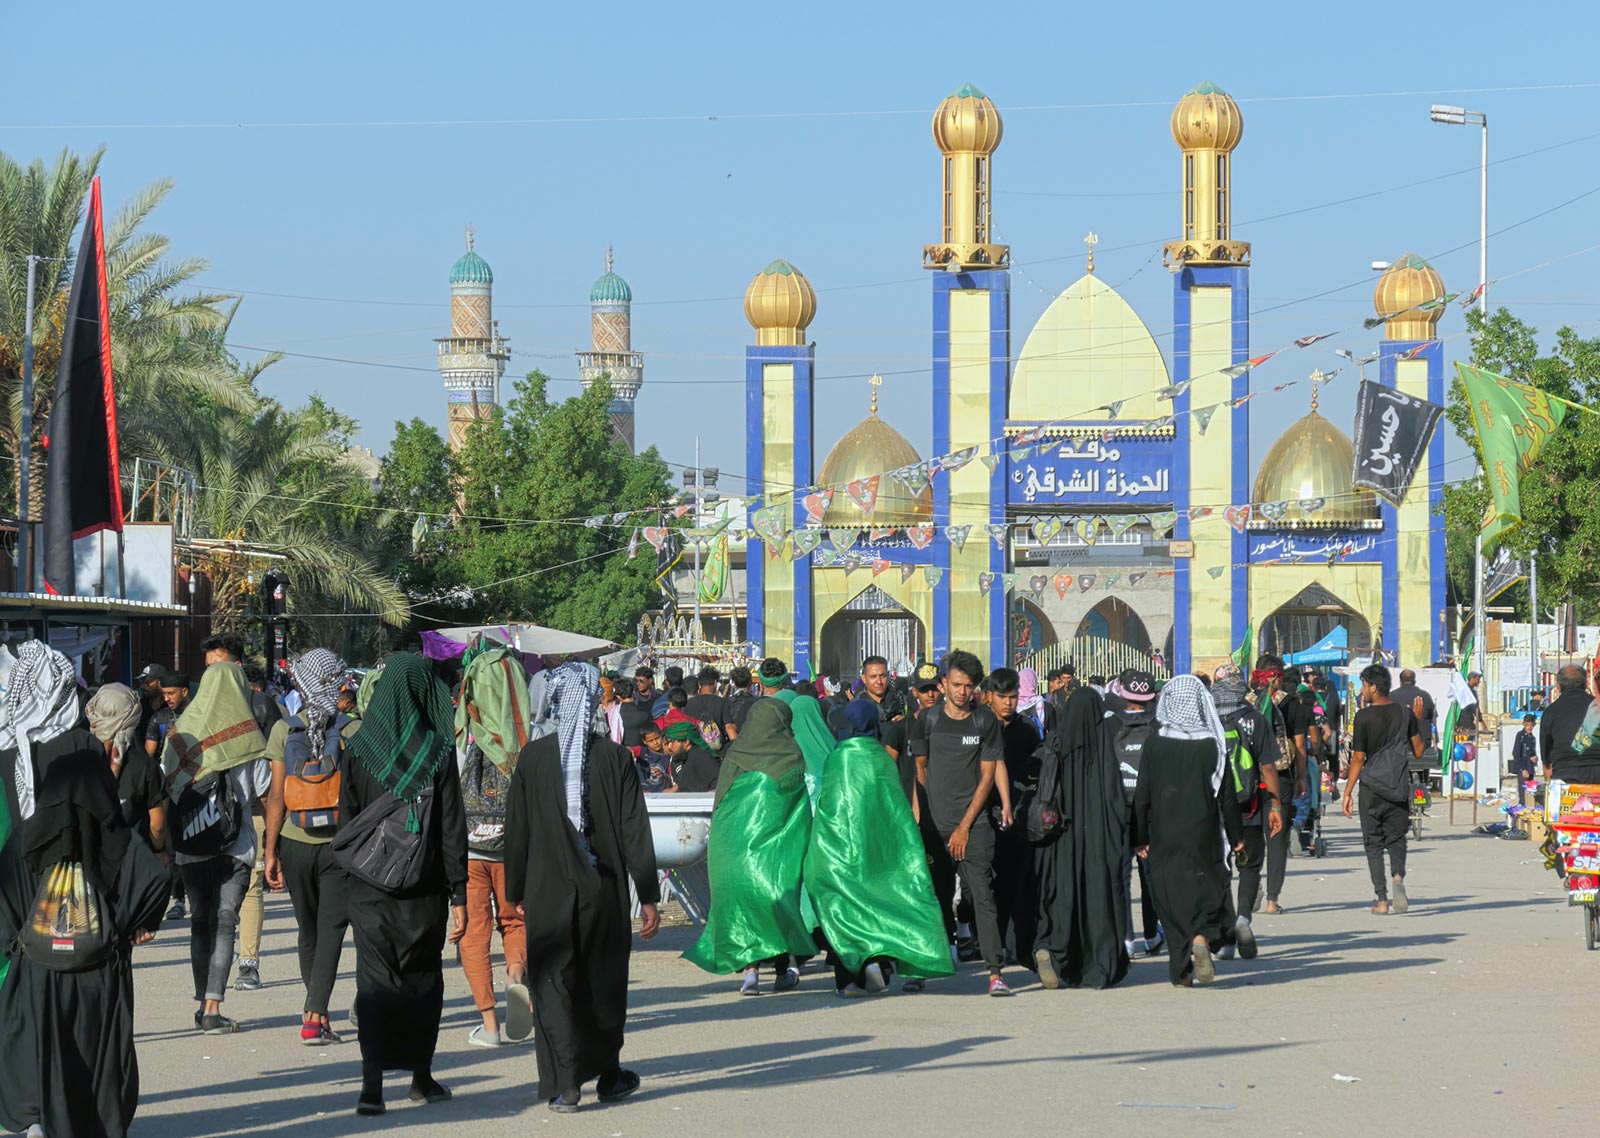 Peregrinos caminando al Santuario de Alhamza Alsharqi, Qadisiya